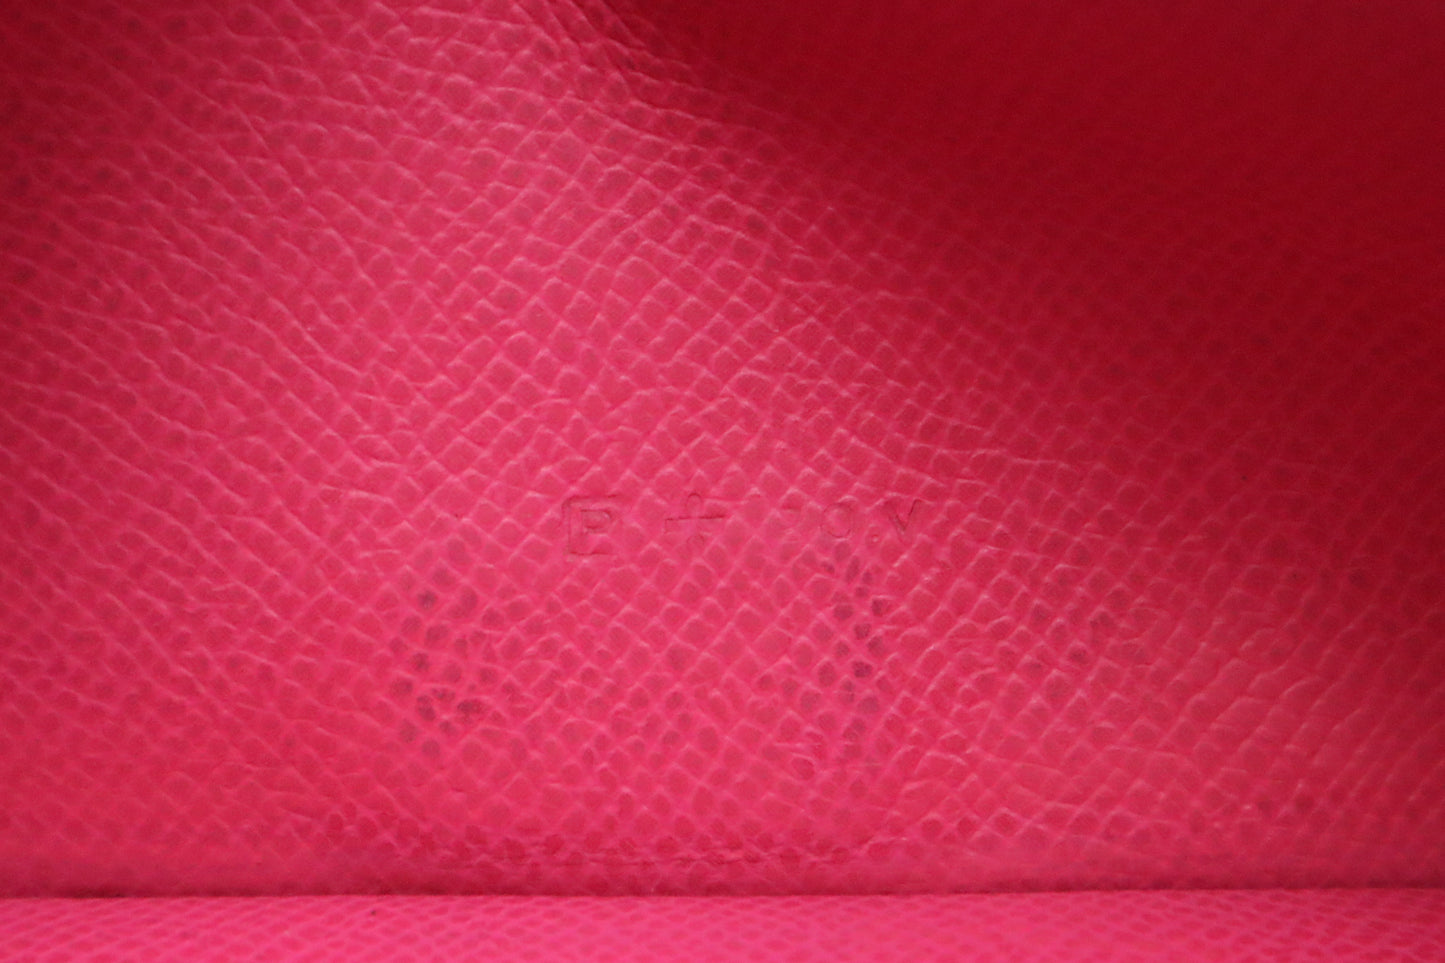 Hermes Bearn Soufflet Wallet in Burgundy Leather